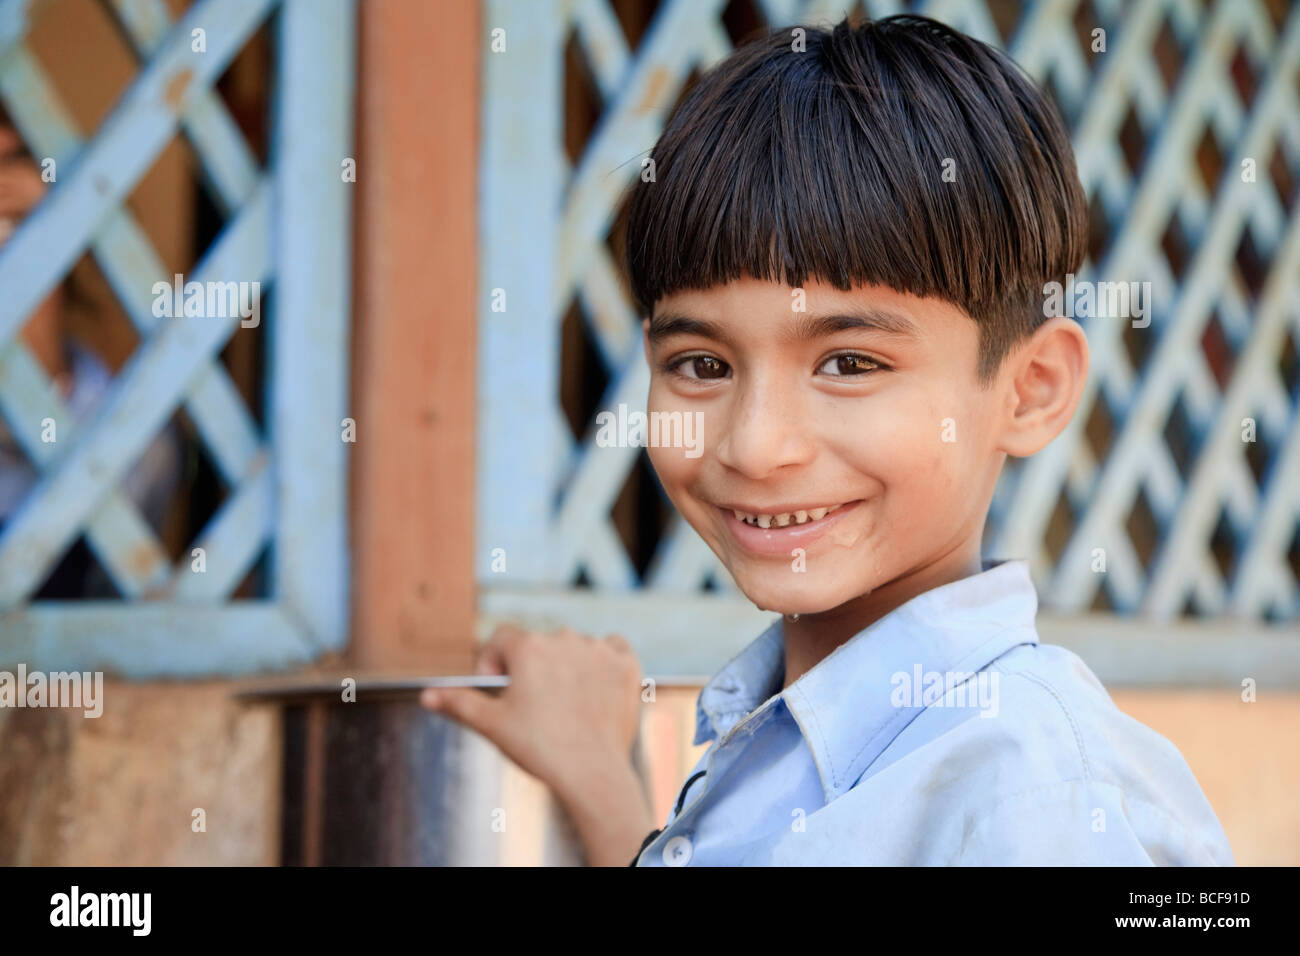 Young Boy, Gokarna town, Kerala, India Stock Photo - Alamy